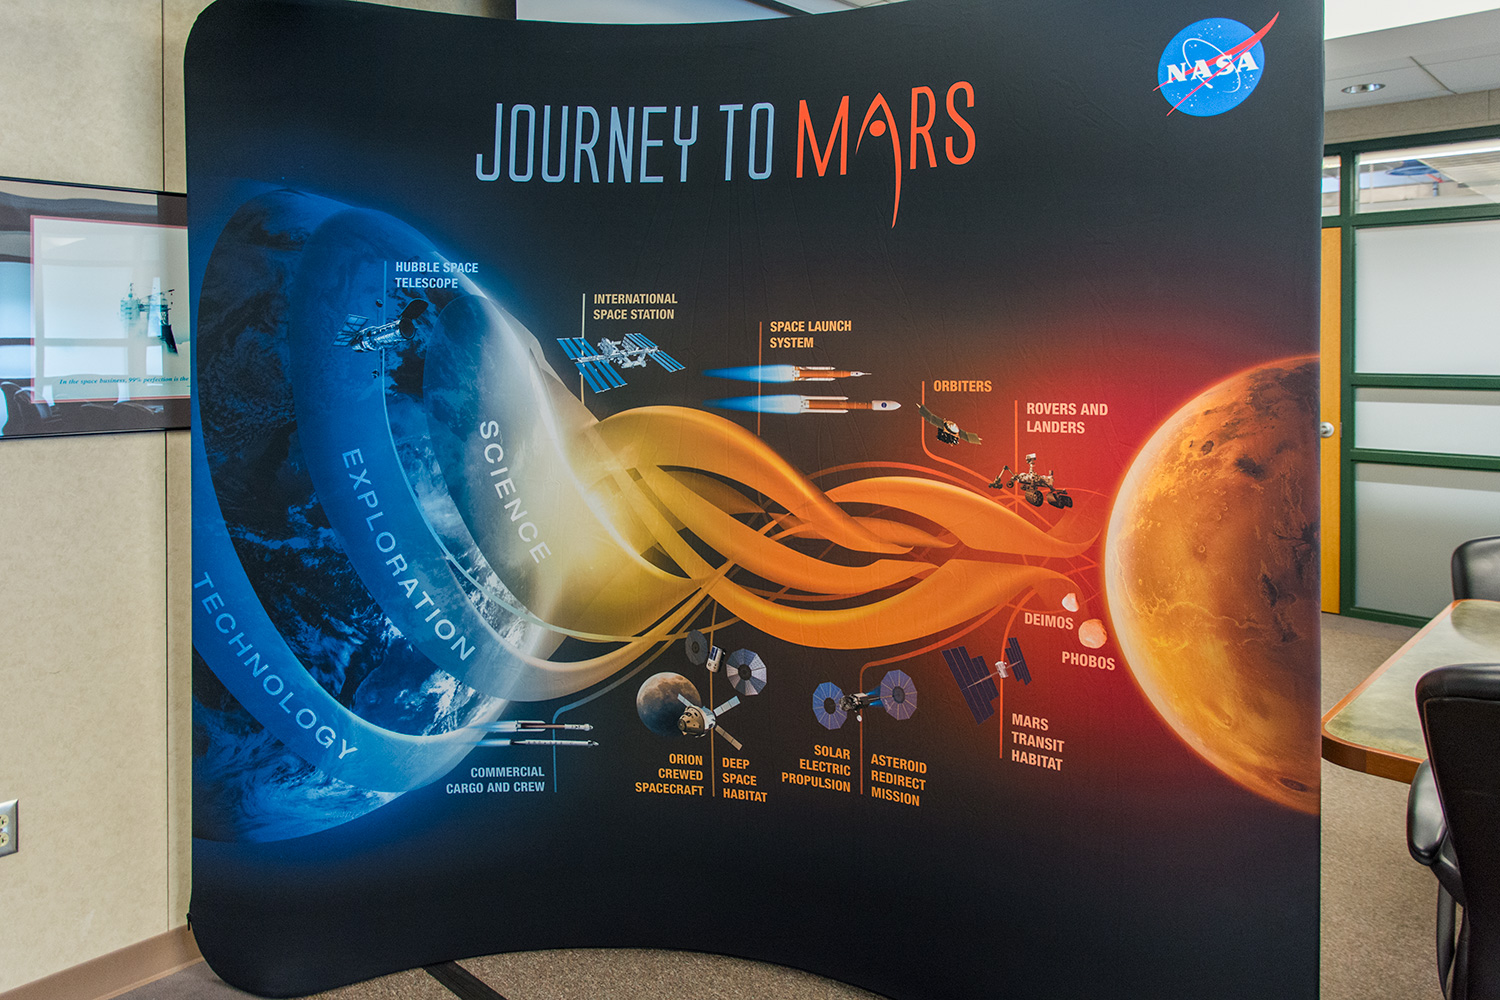 NASA Journey to Mars event